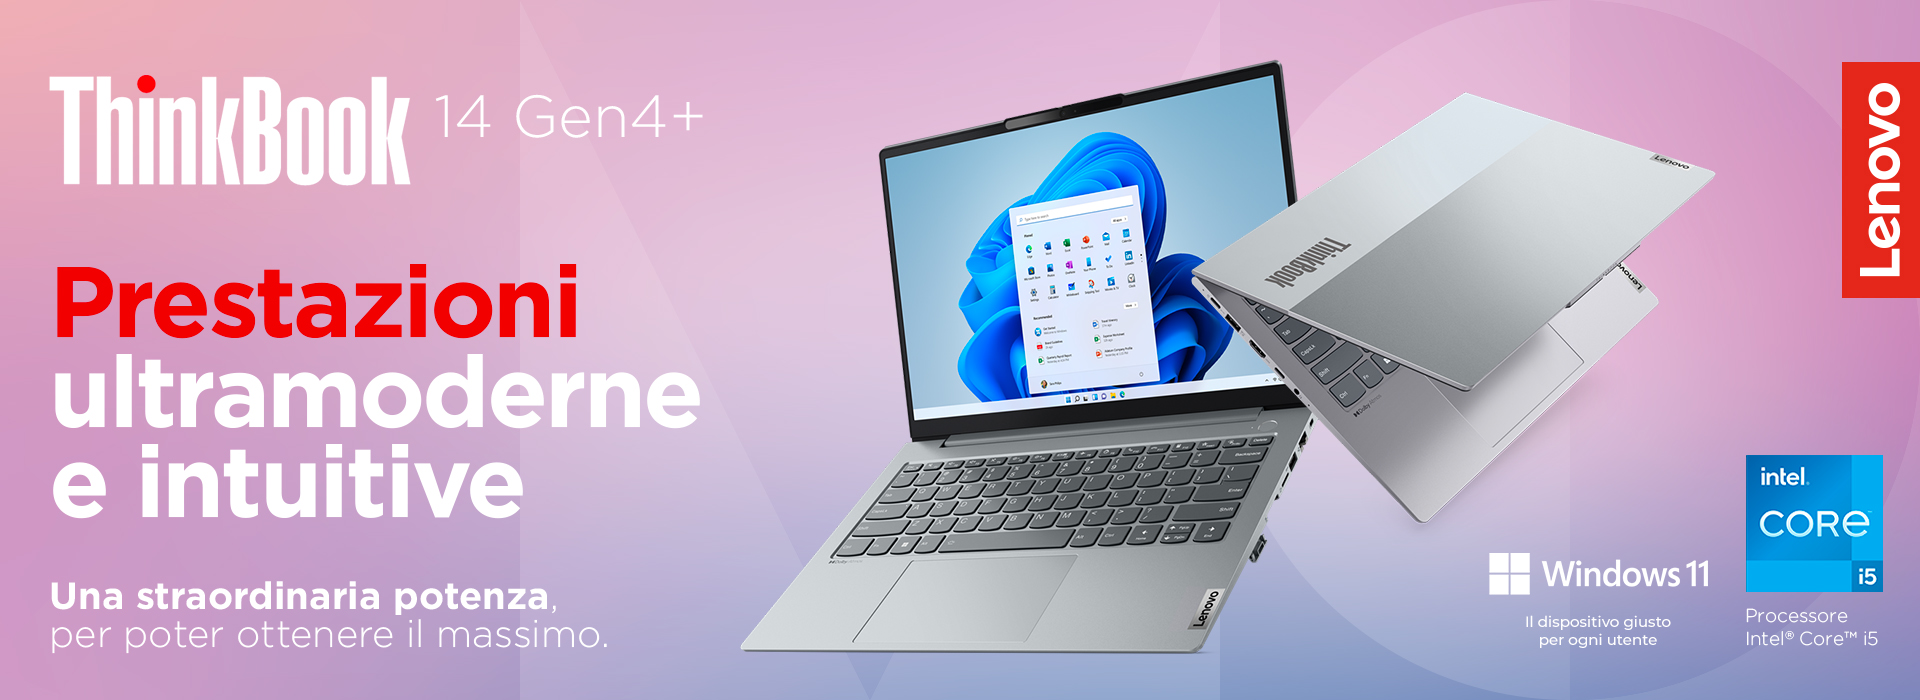 ThinkBook 14 Gen4+ | Lenovo